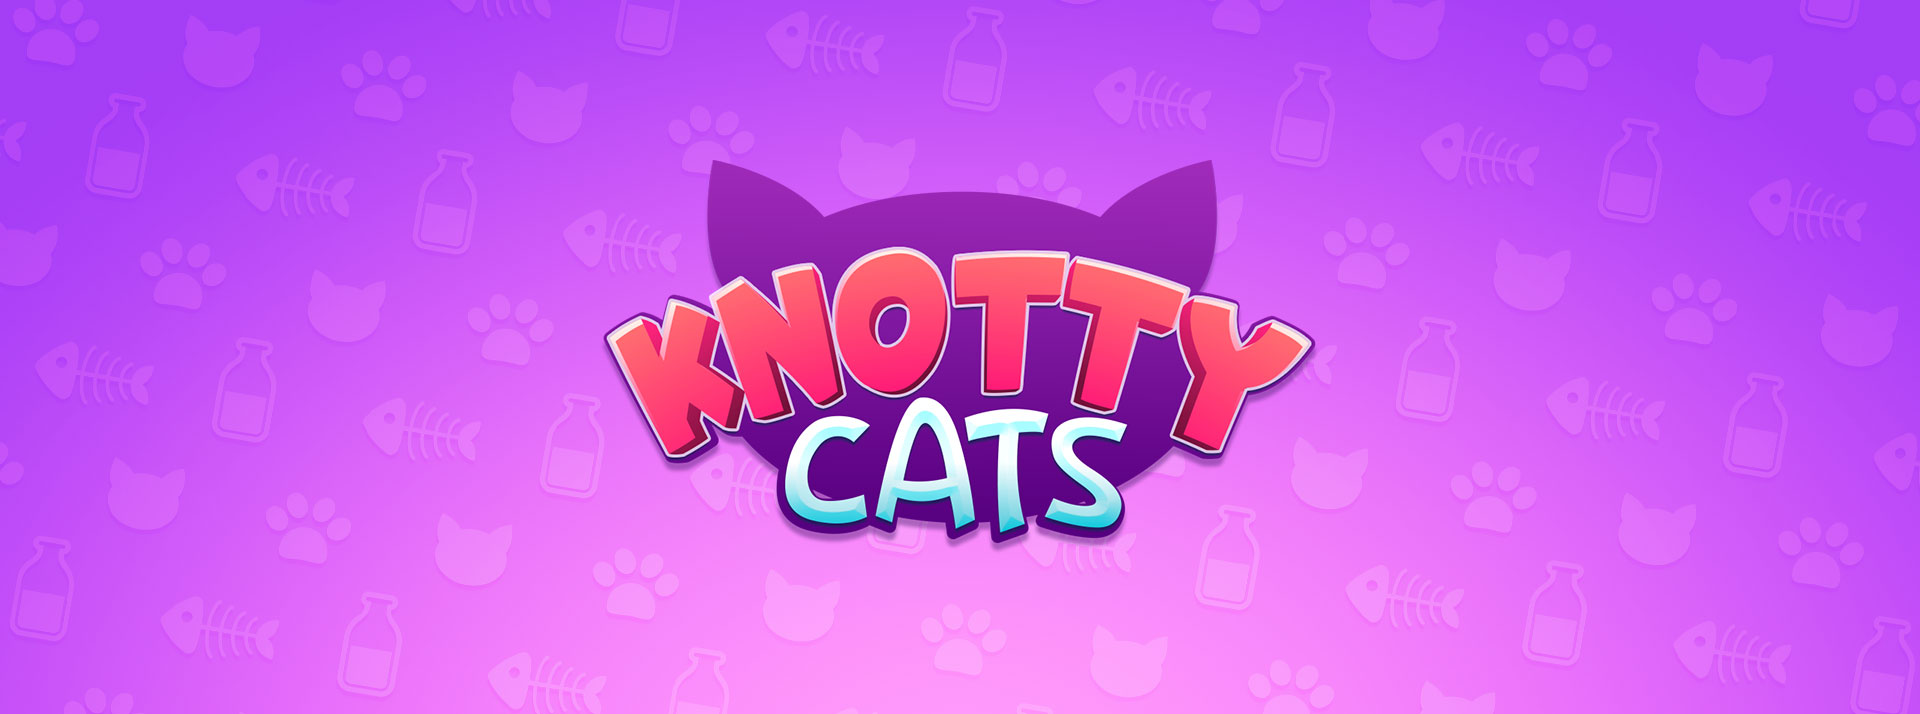 Knotty Cats